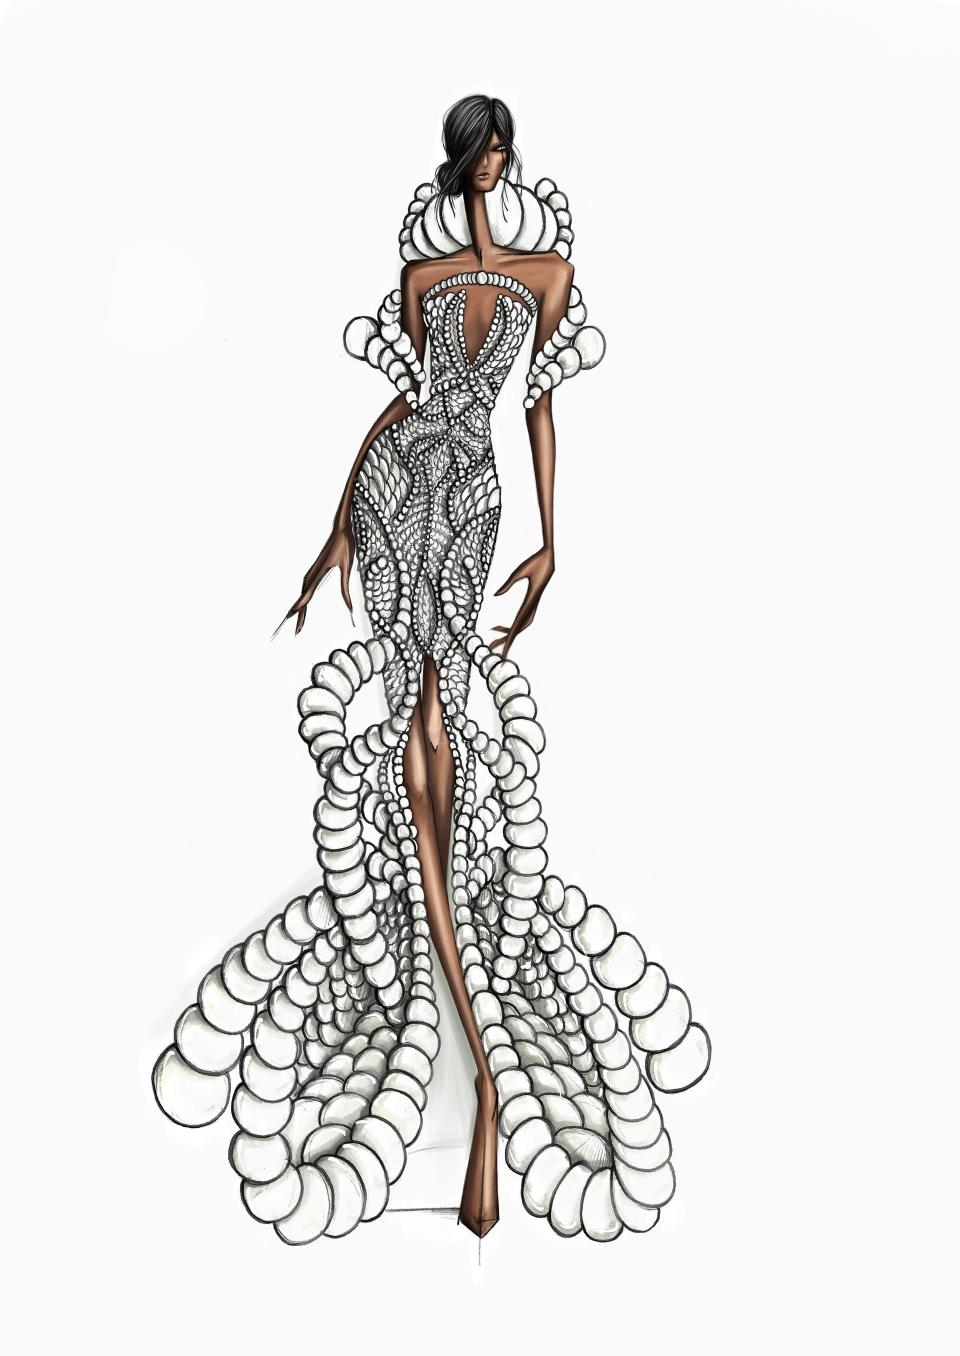 Iris van Herpen’s sketch of Gabrielle Union’s 2021 Met Gala dress. - Credit: Courtesy Image